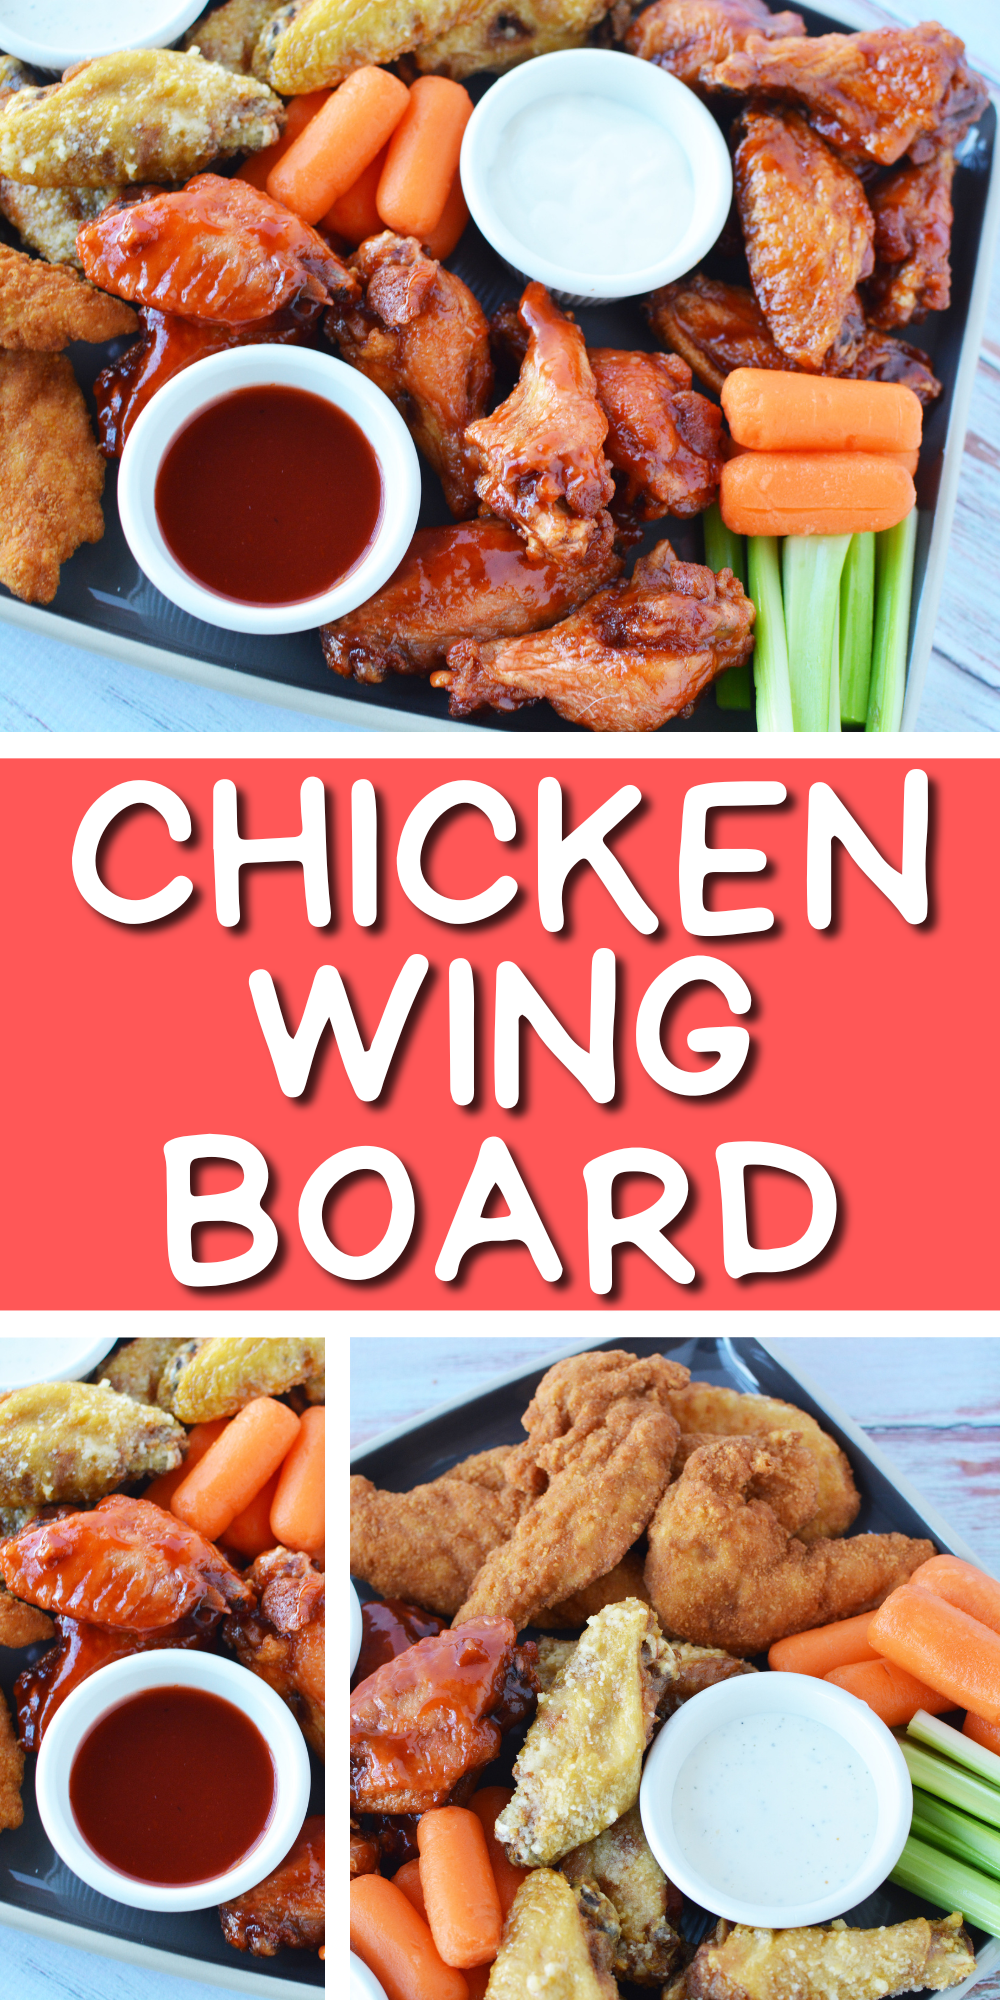 Chicken Wing Charcuterie Board